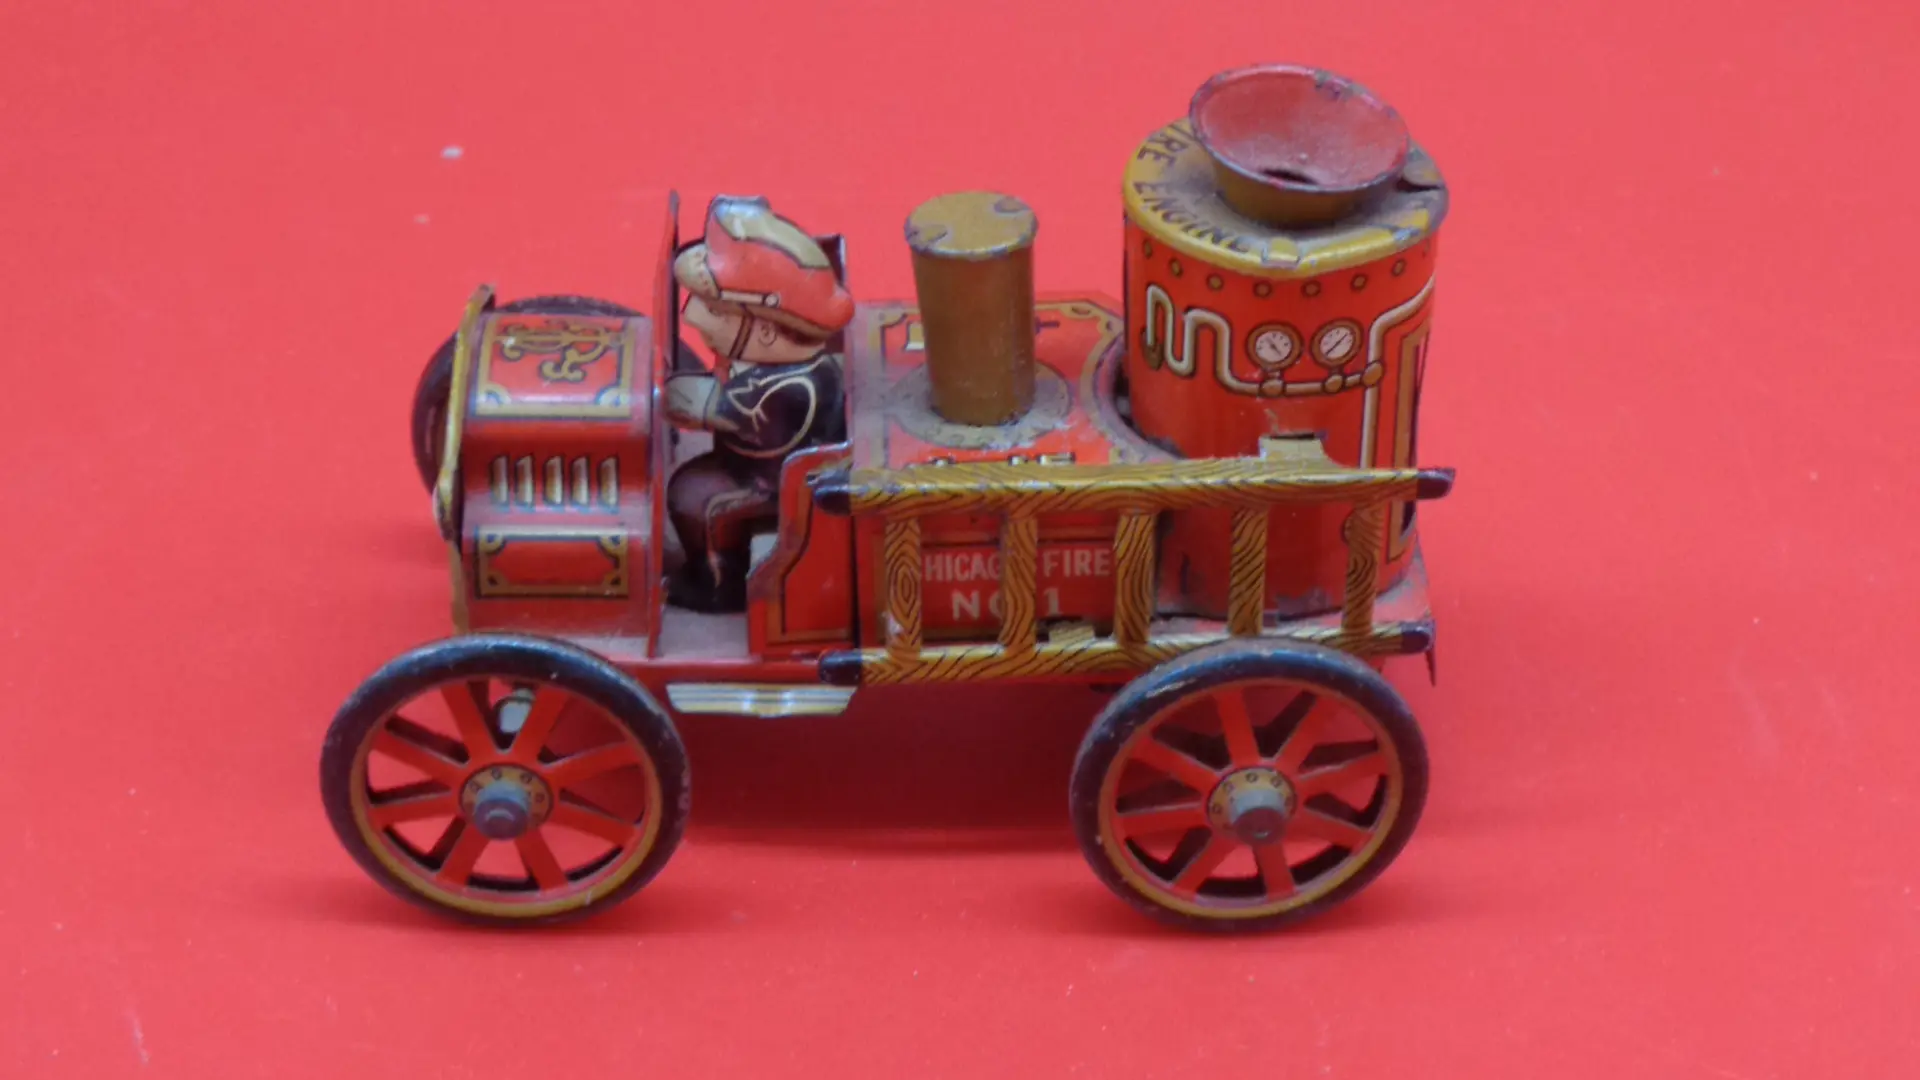 Vintage firetruck toy